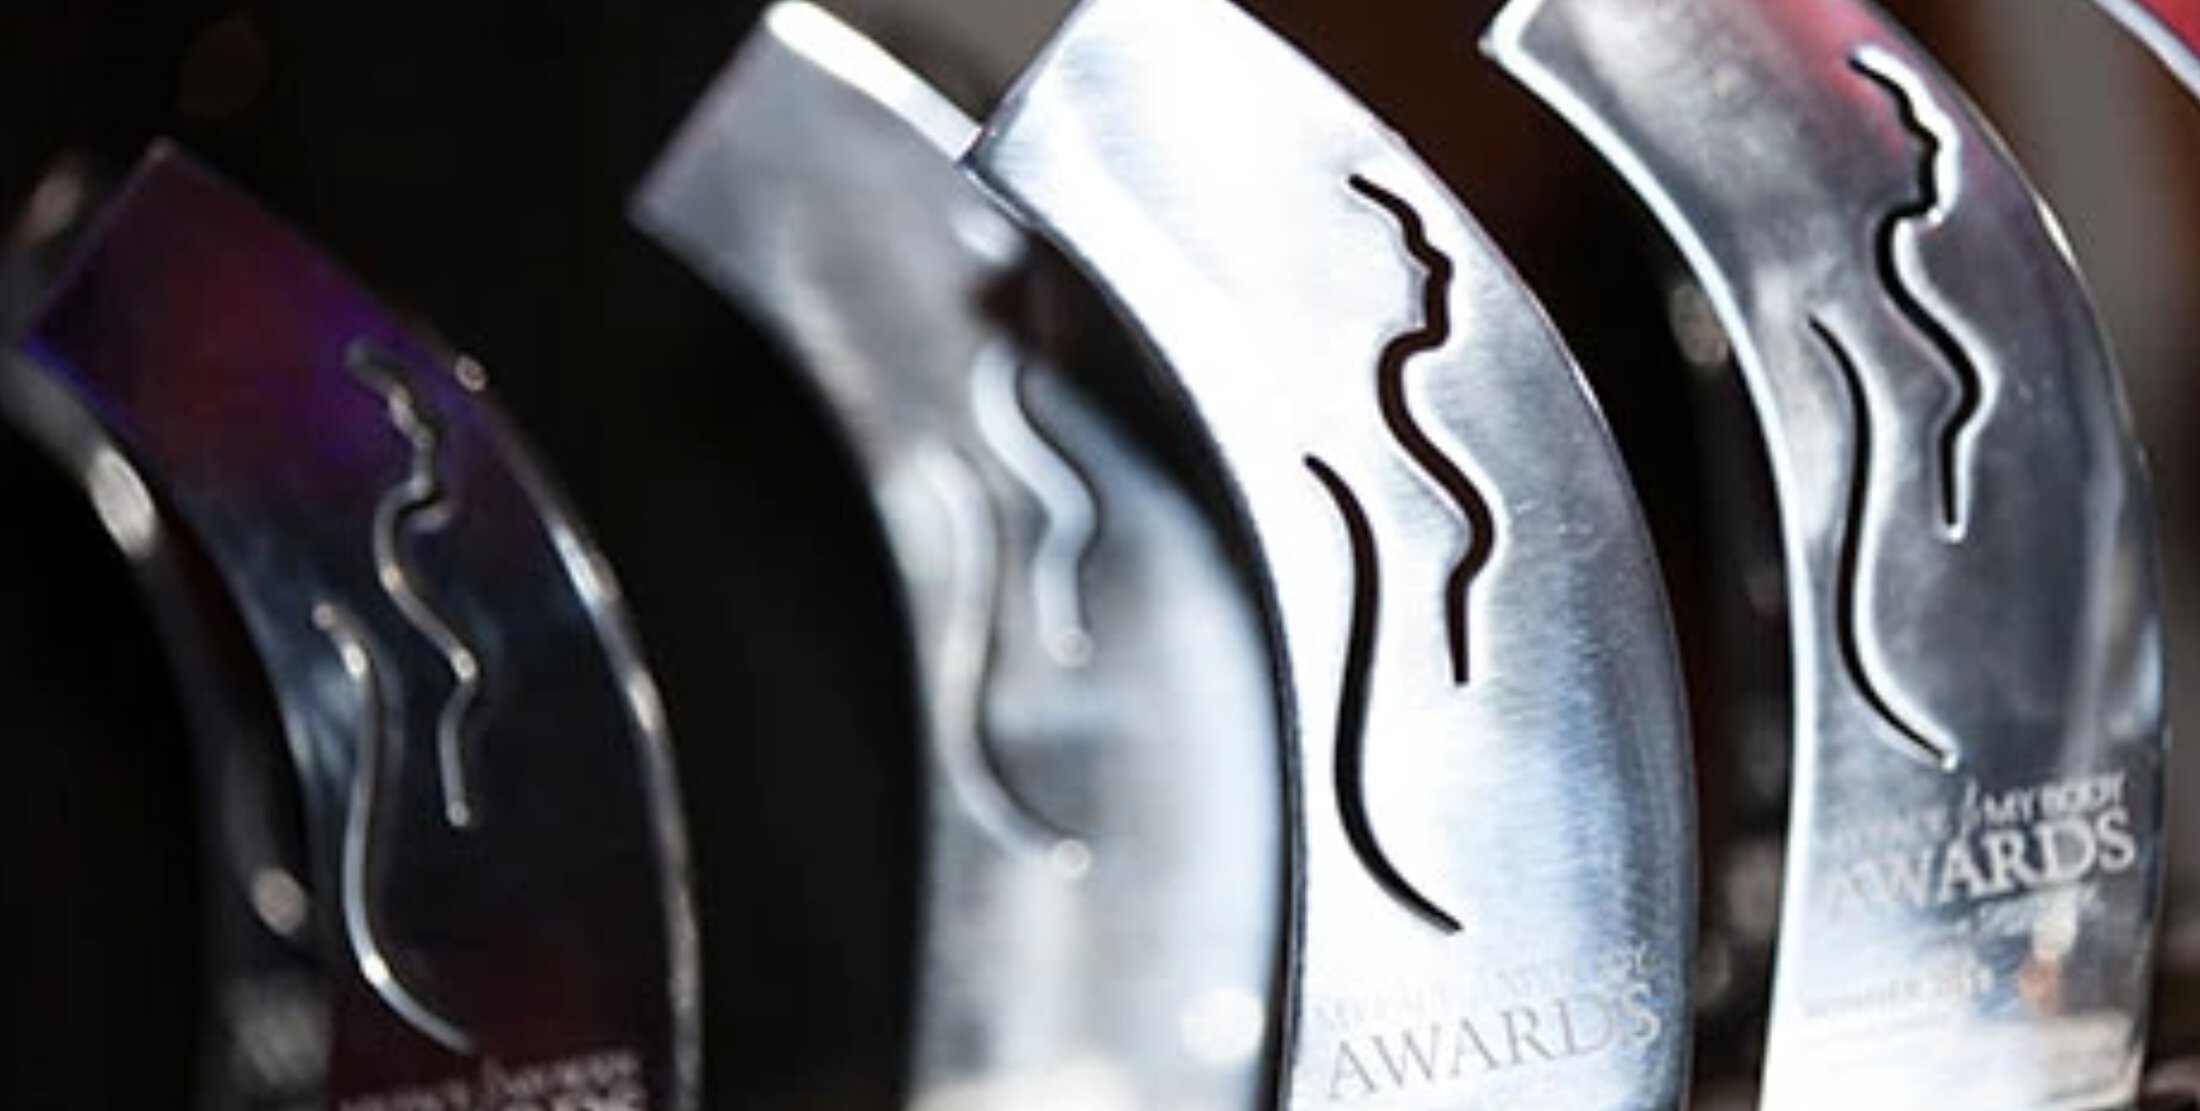 Plastic surgeon of the year awards